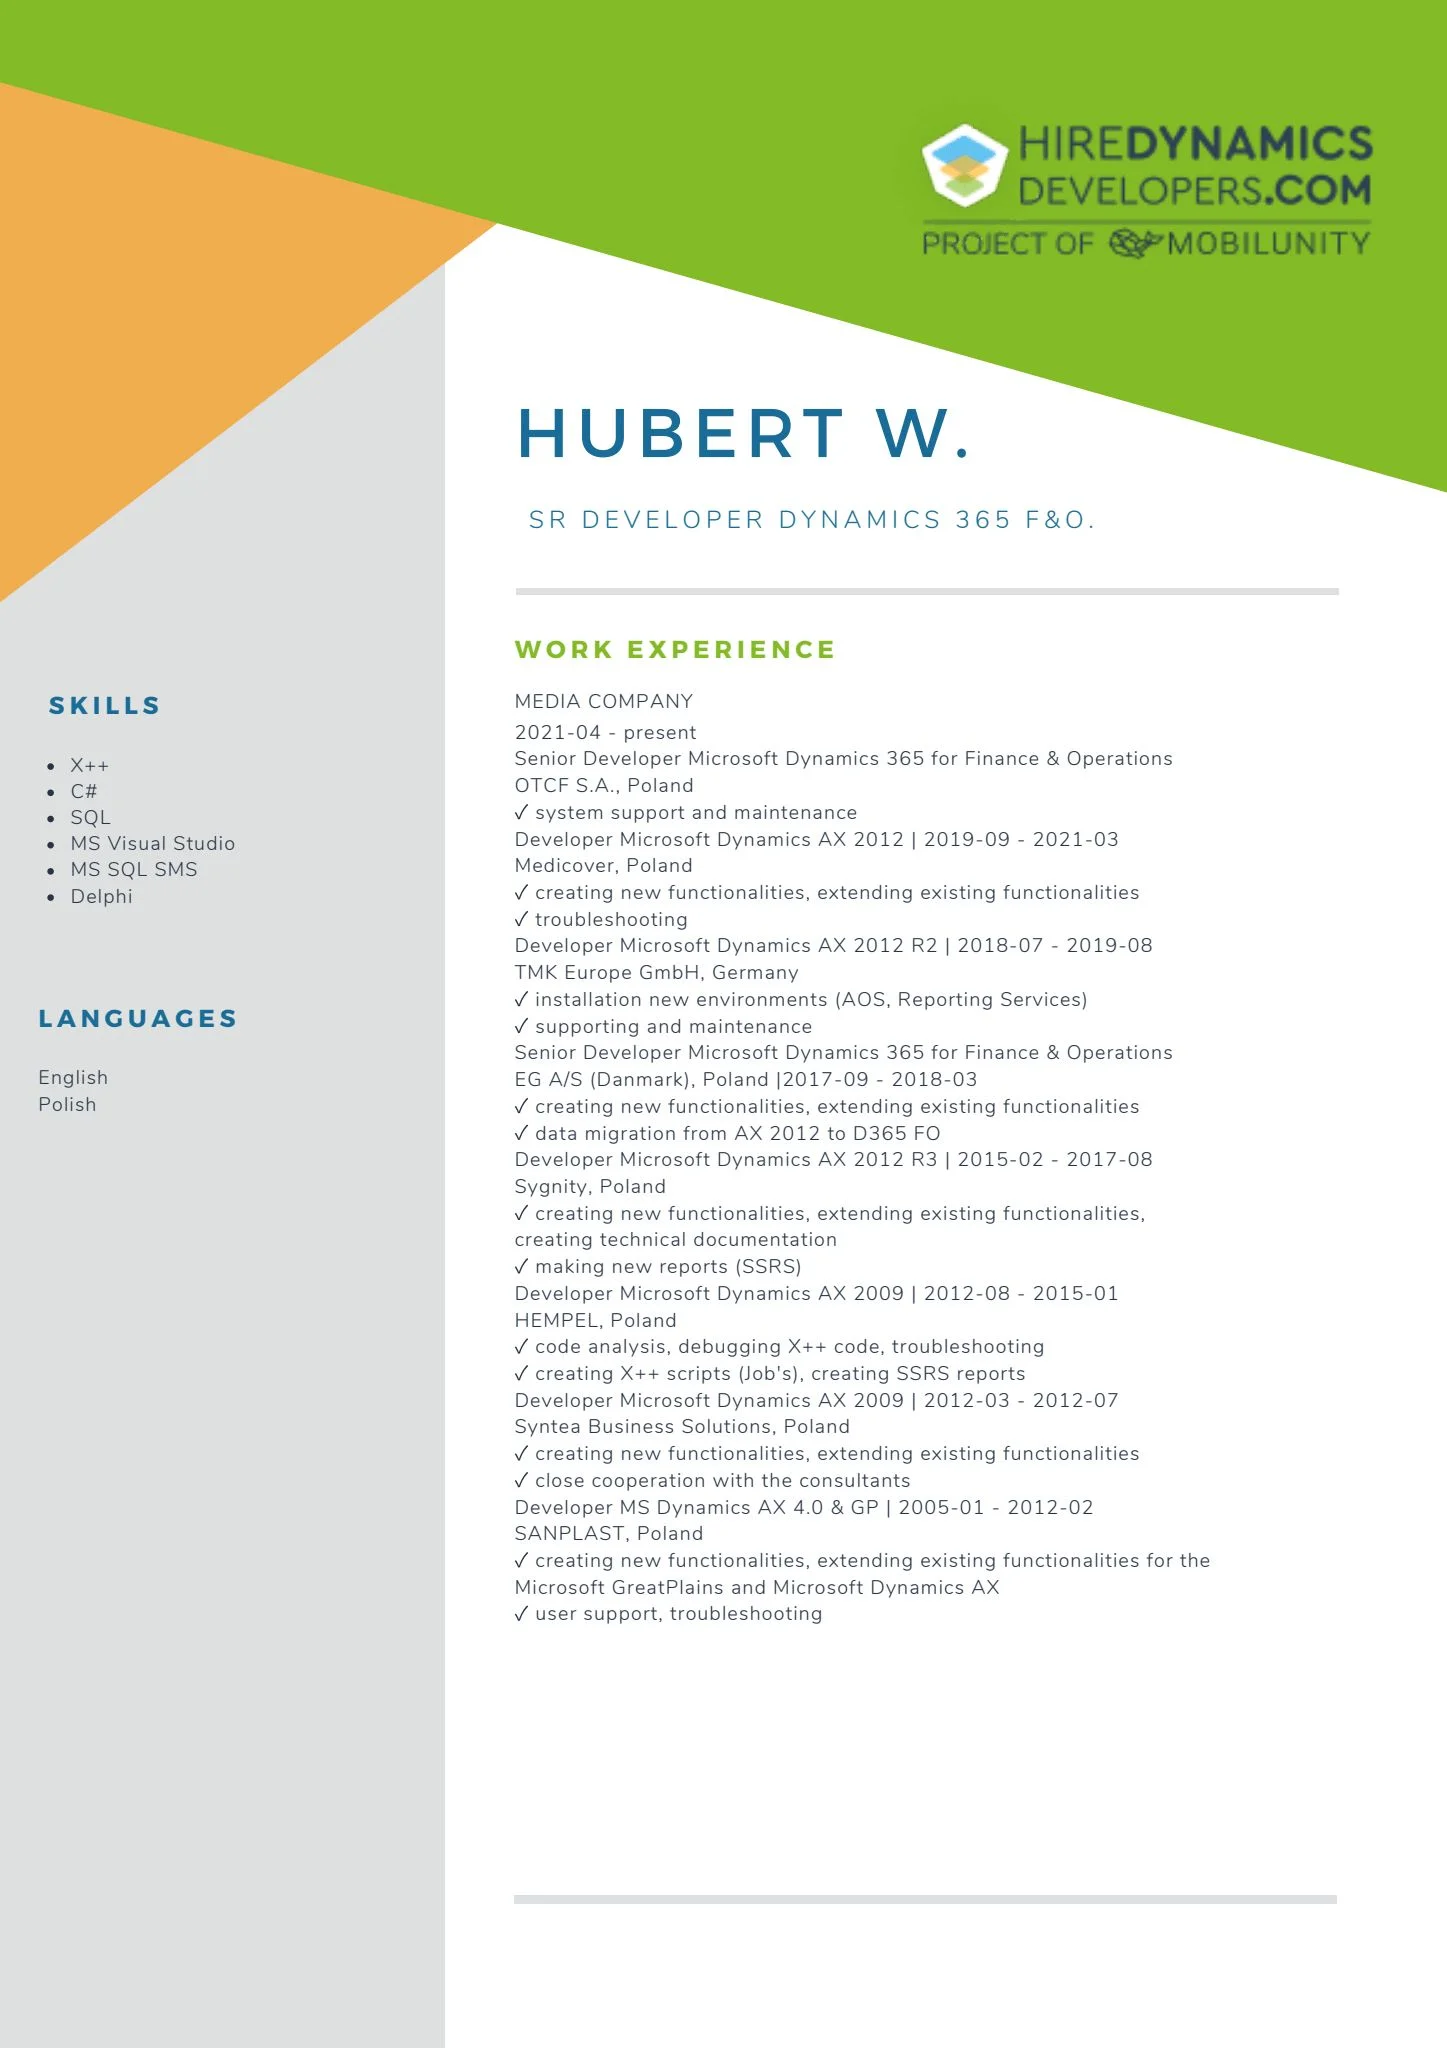 Hubert W. – Senior Developer Microsoft Dynamics AX